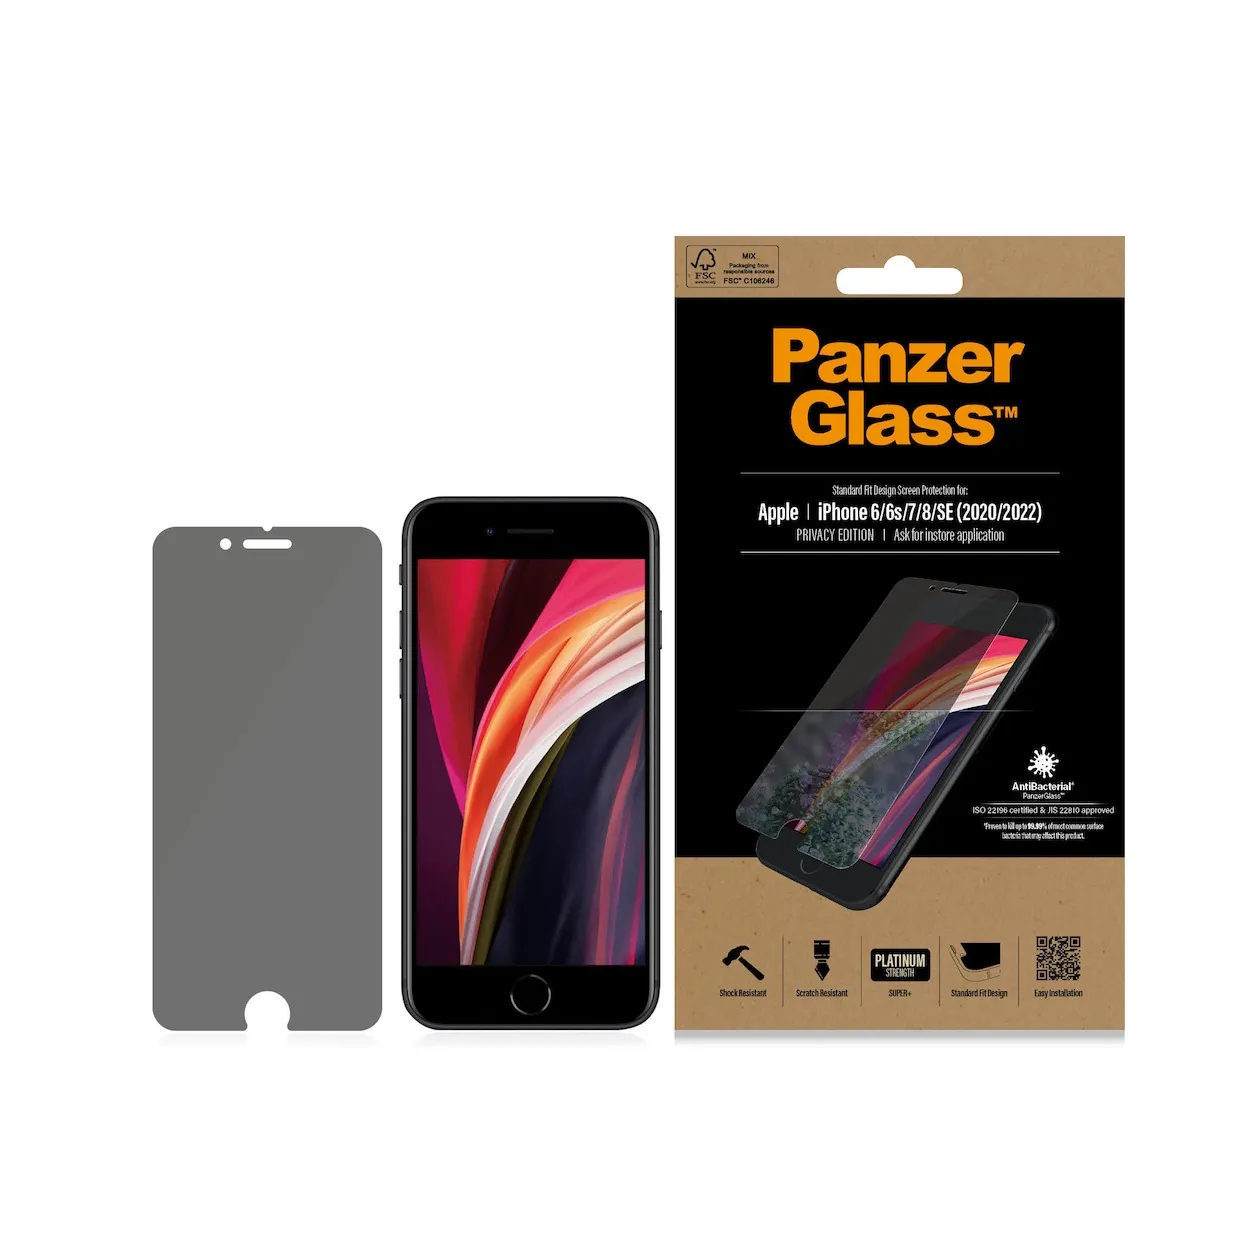 PanzerGlass iPhone 6/6s/7/8/SE 2020/2022 privacy